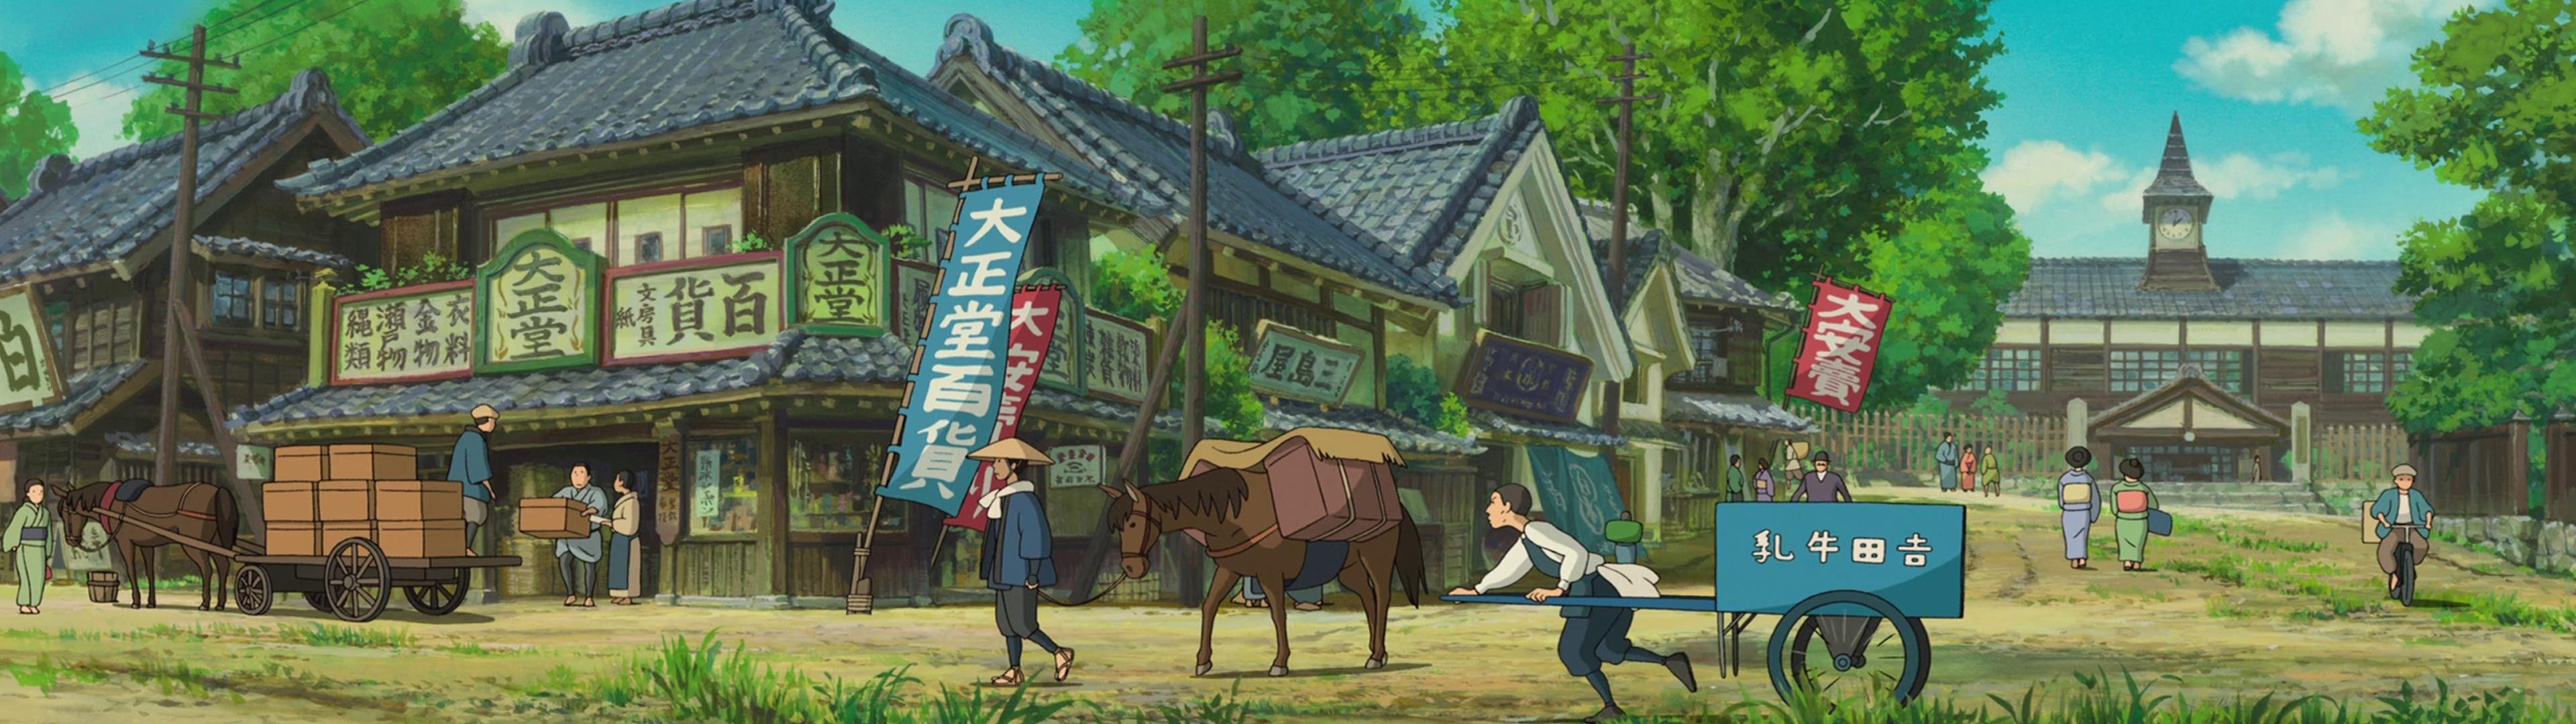 Ghibli Background Kodama